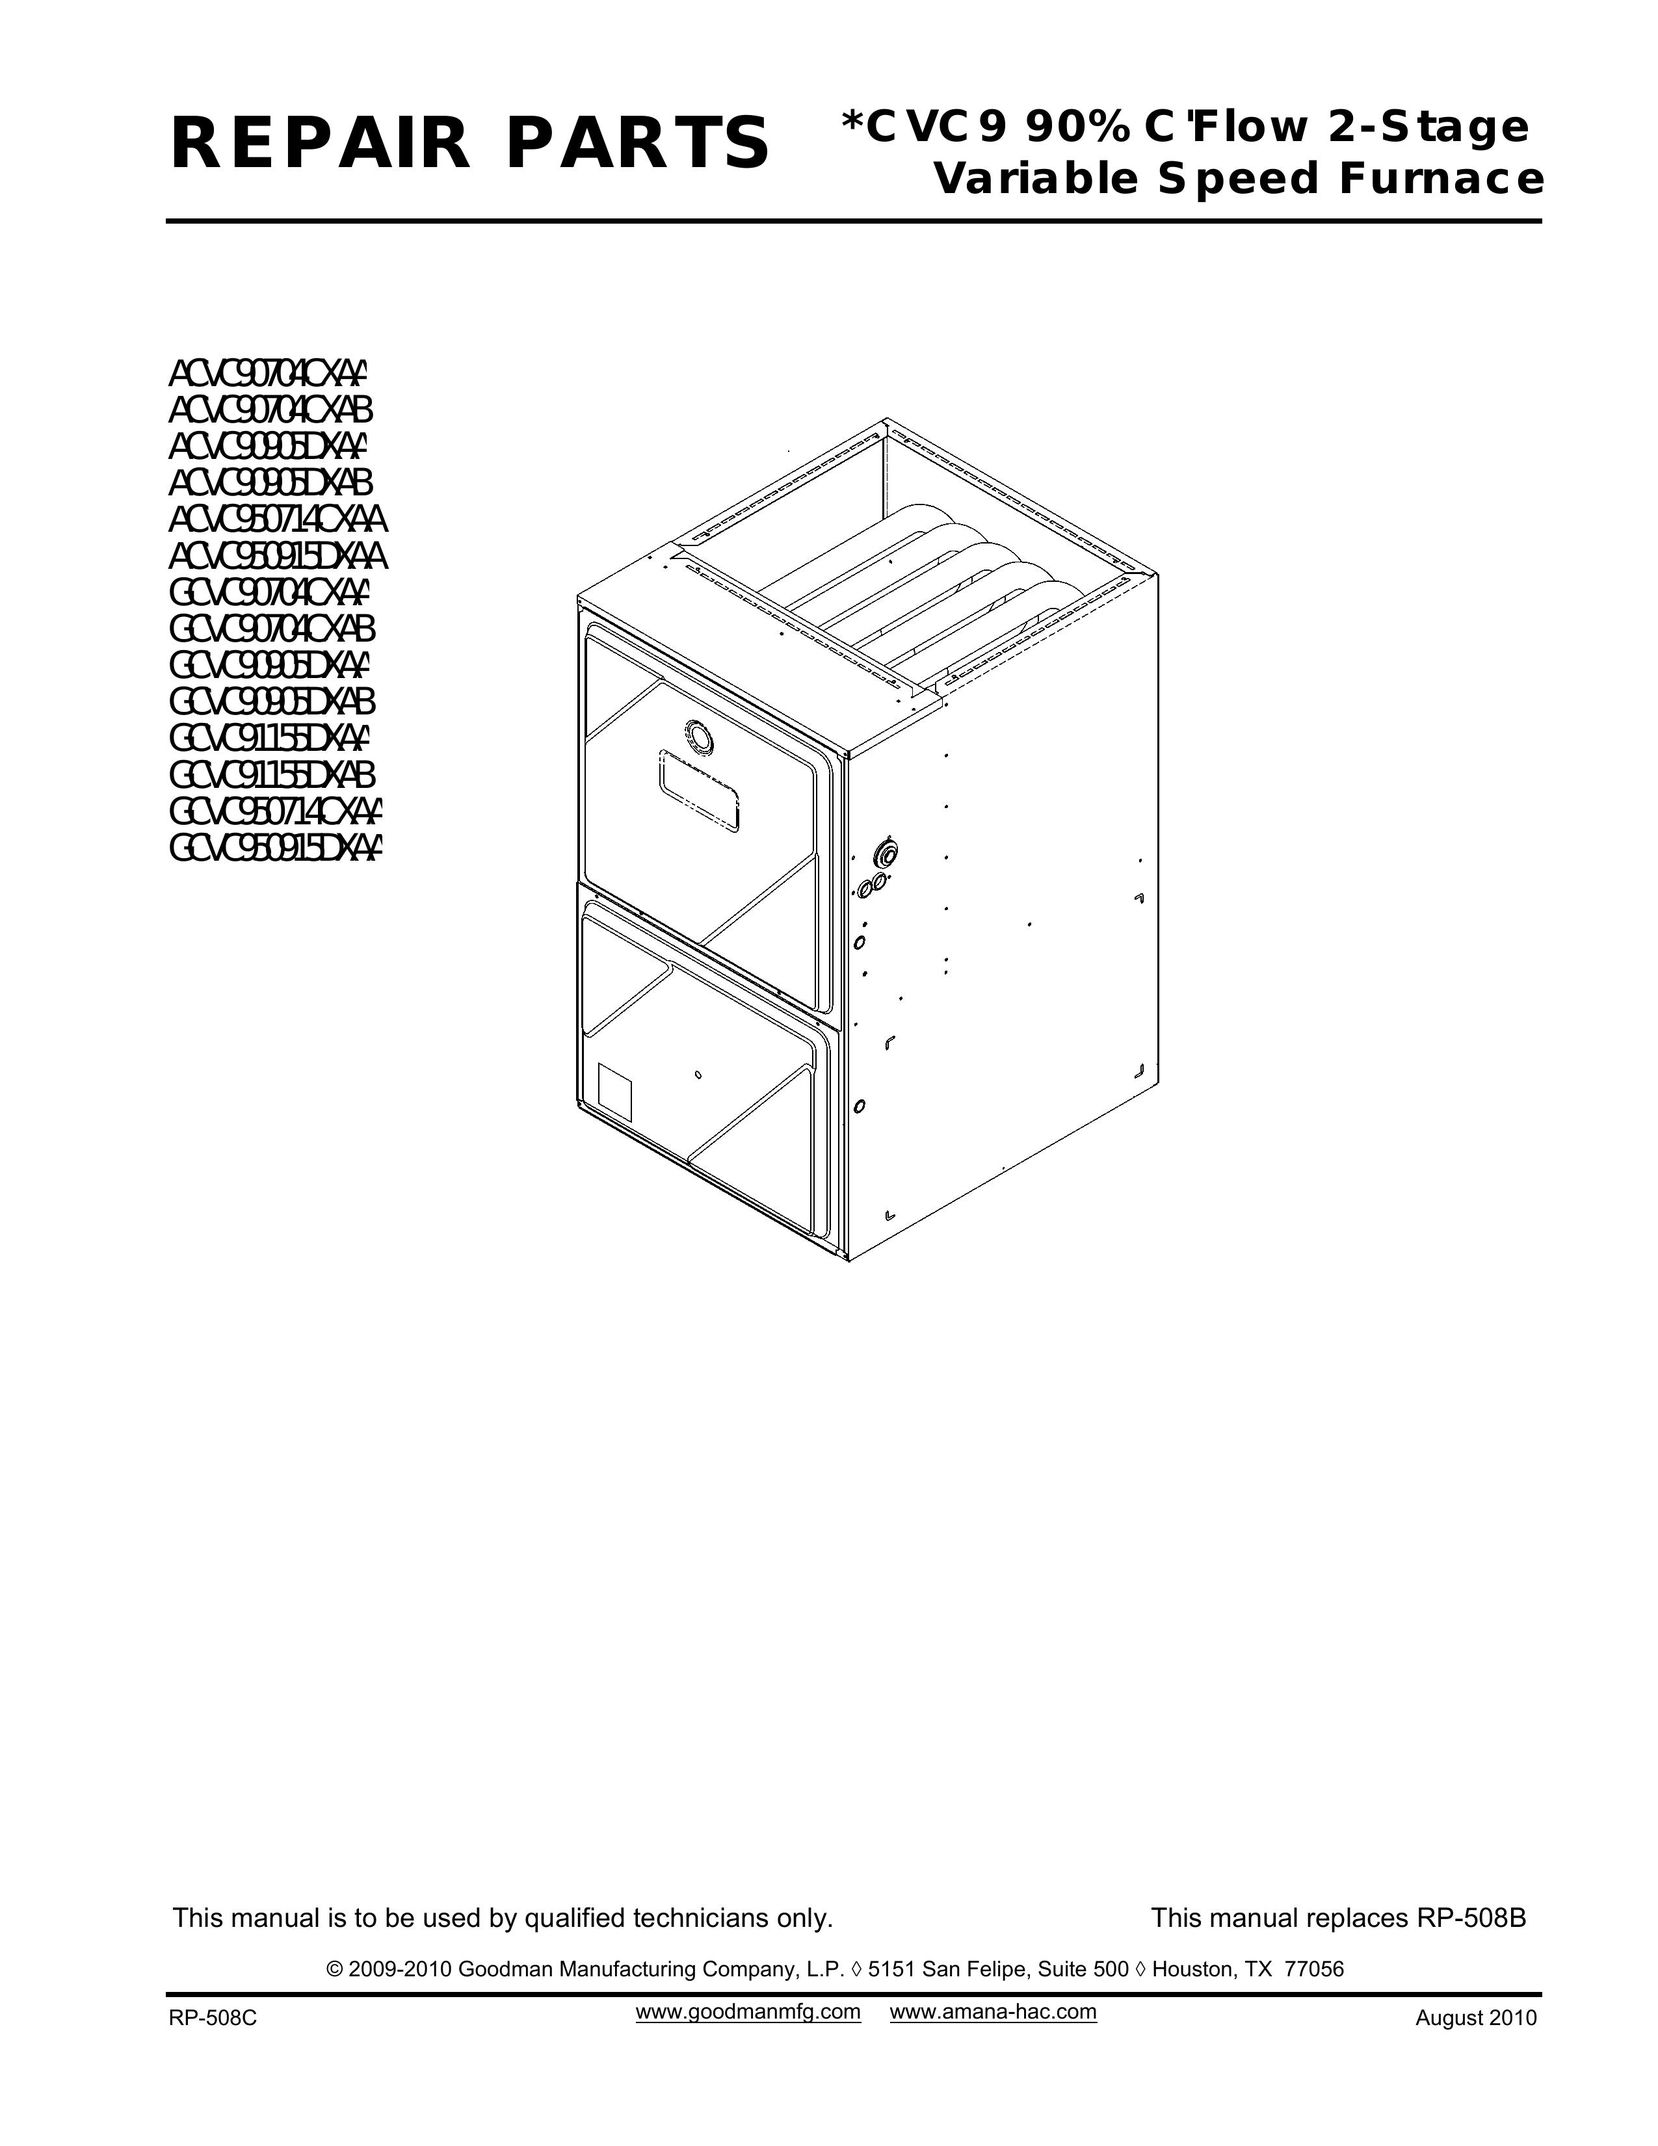 Goodman Mfg ACVC90704CXAB Furnace User Manual